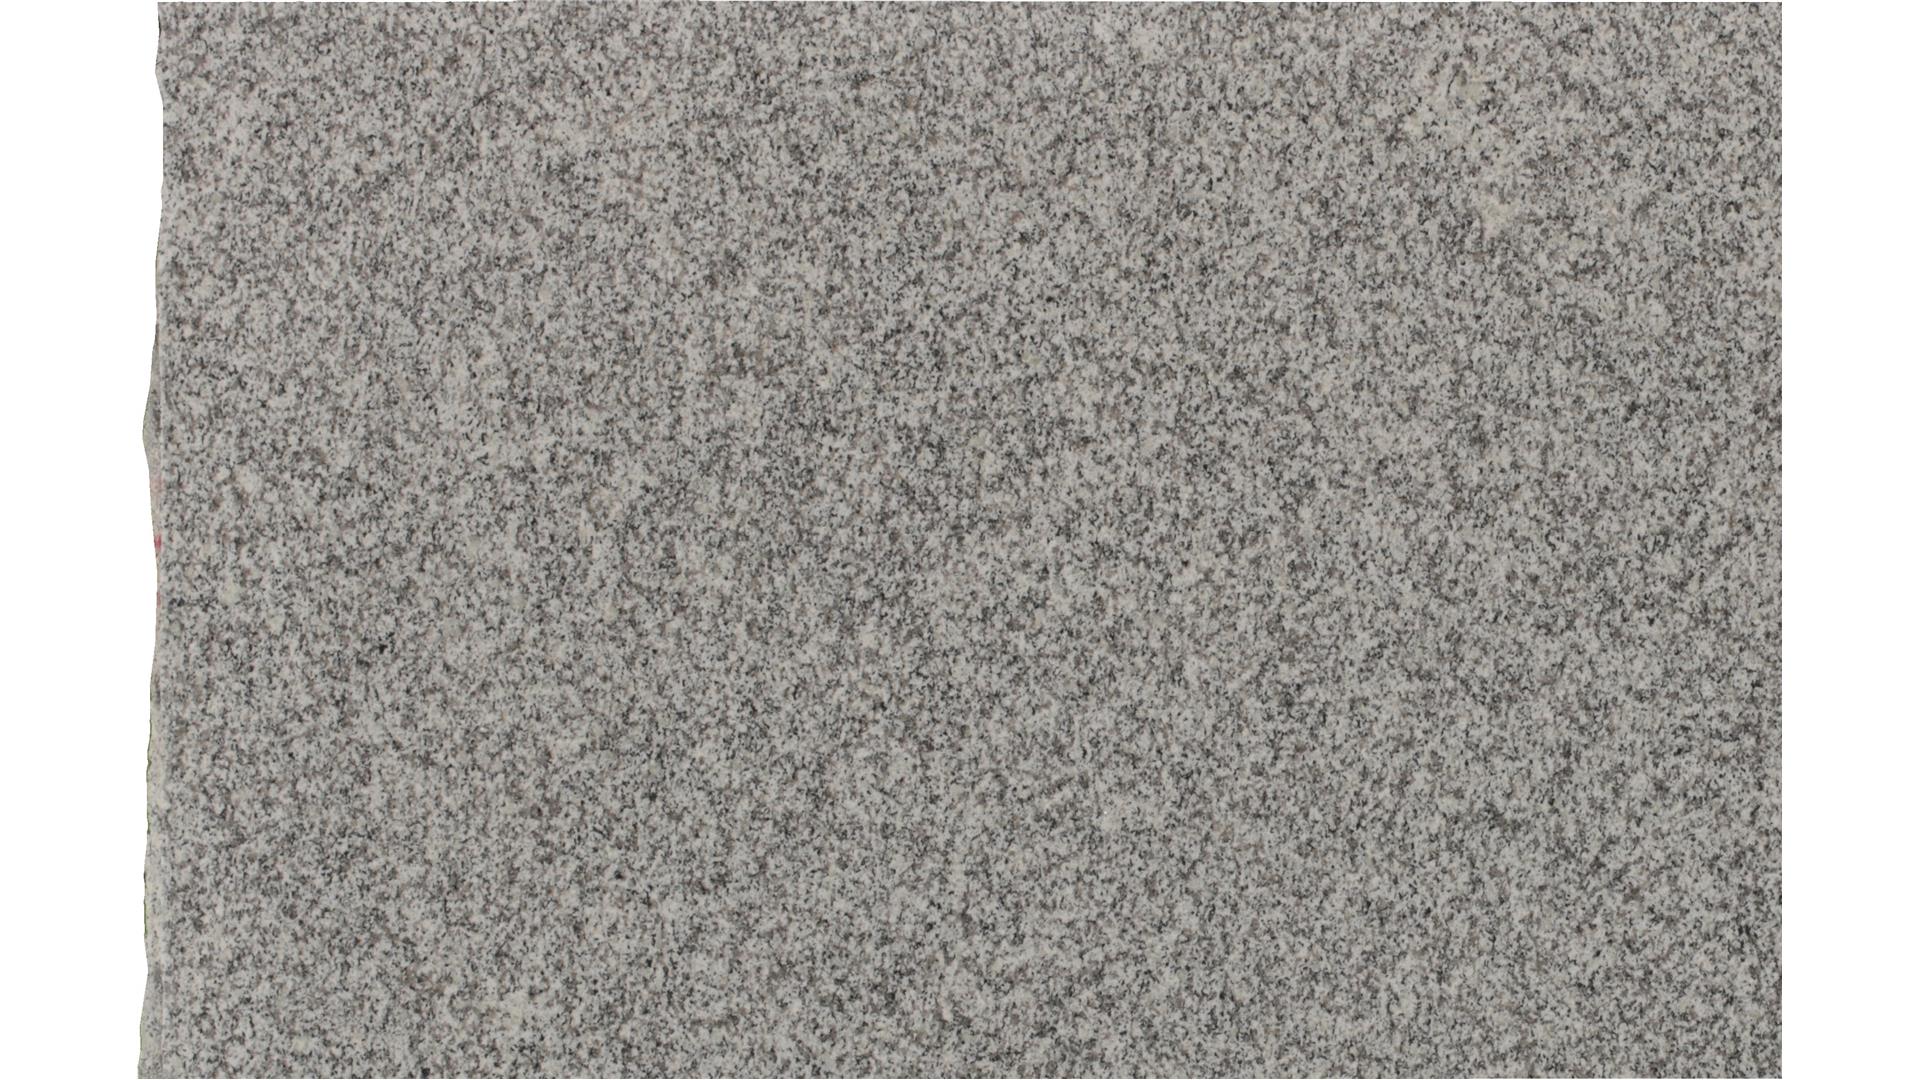 Luna Pearl (S/O) Granite Slabs